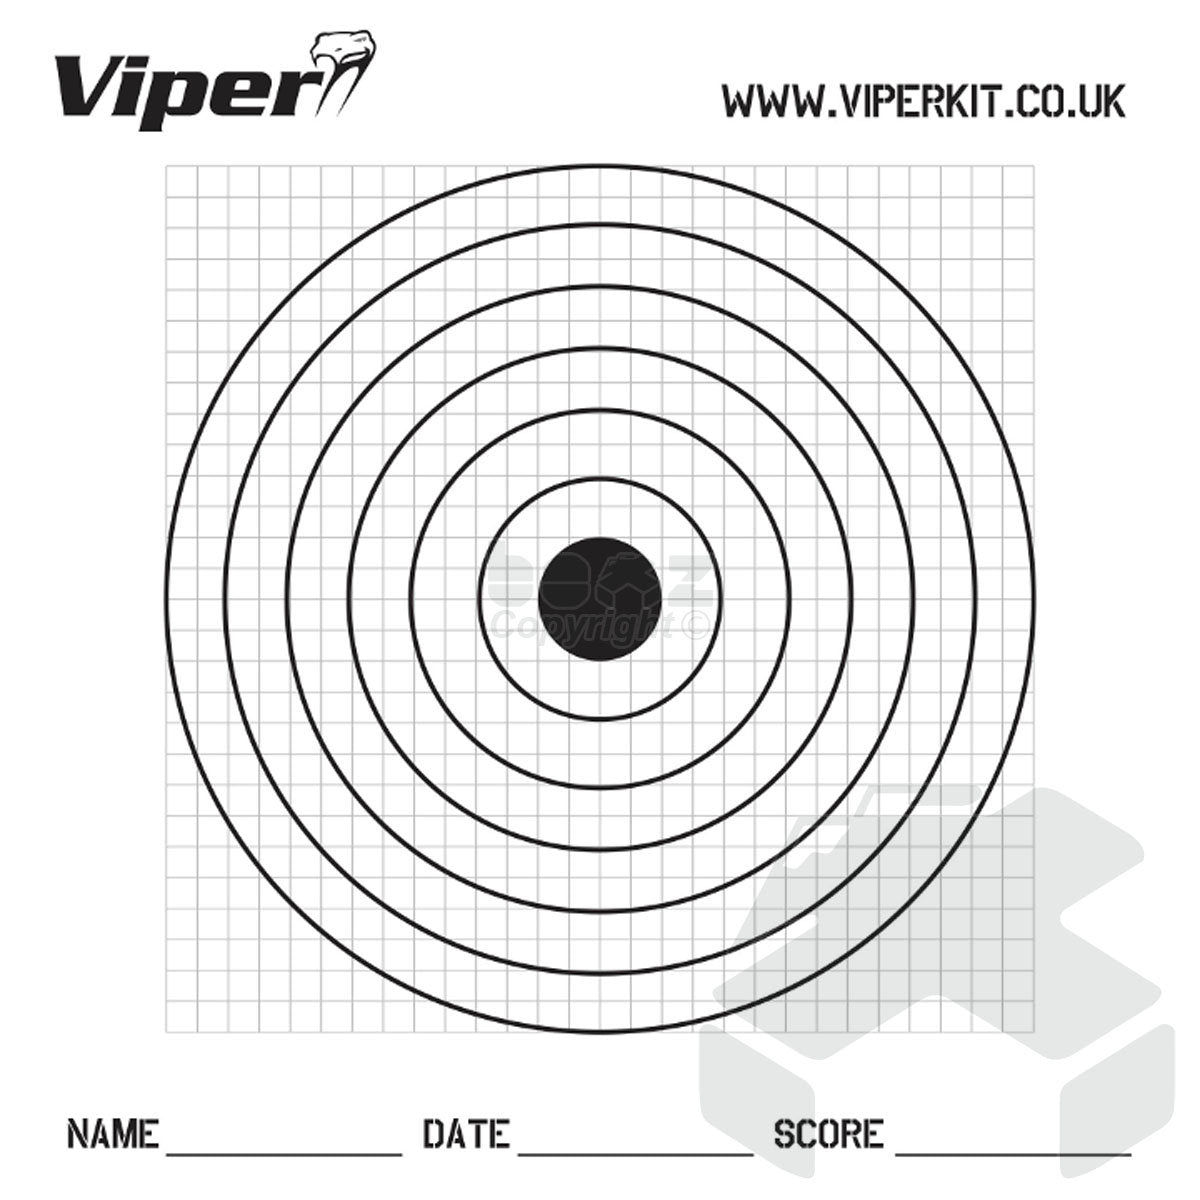 Viper Pro Target Paper Targets